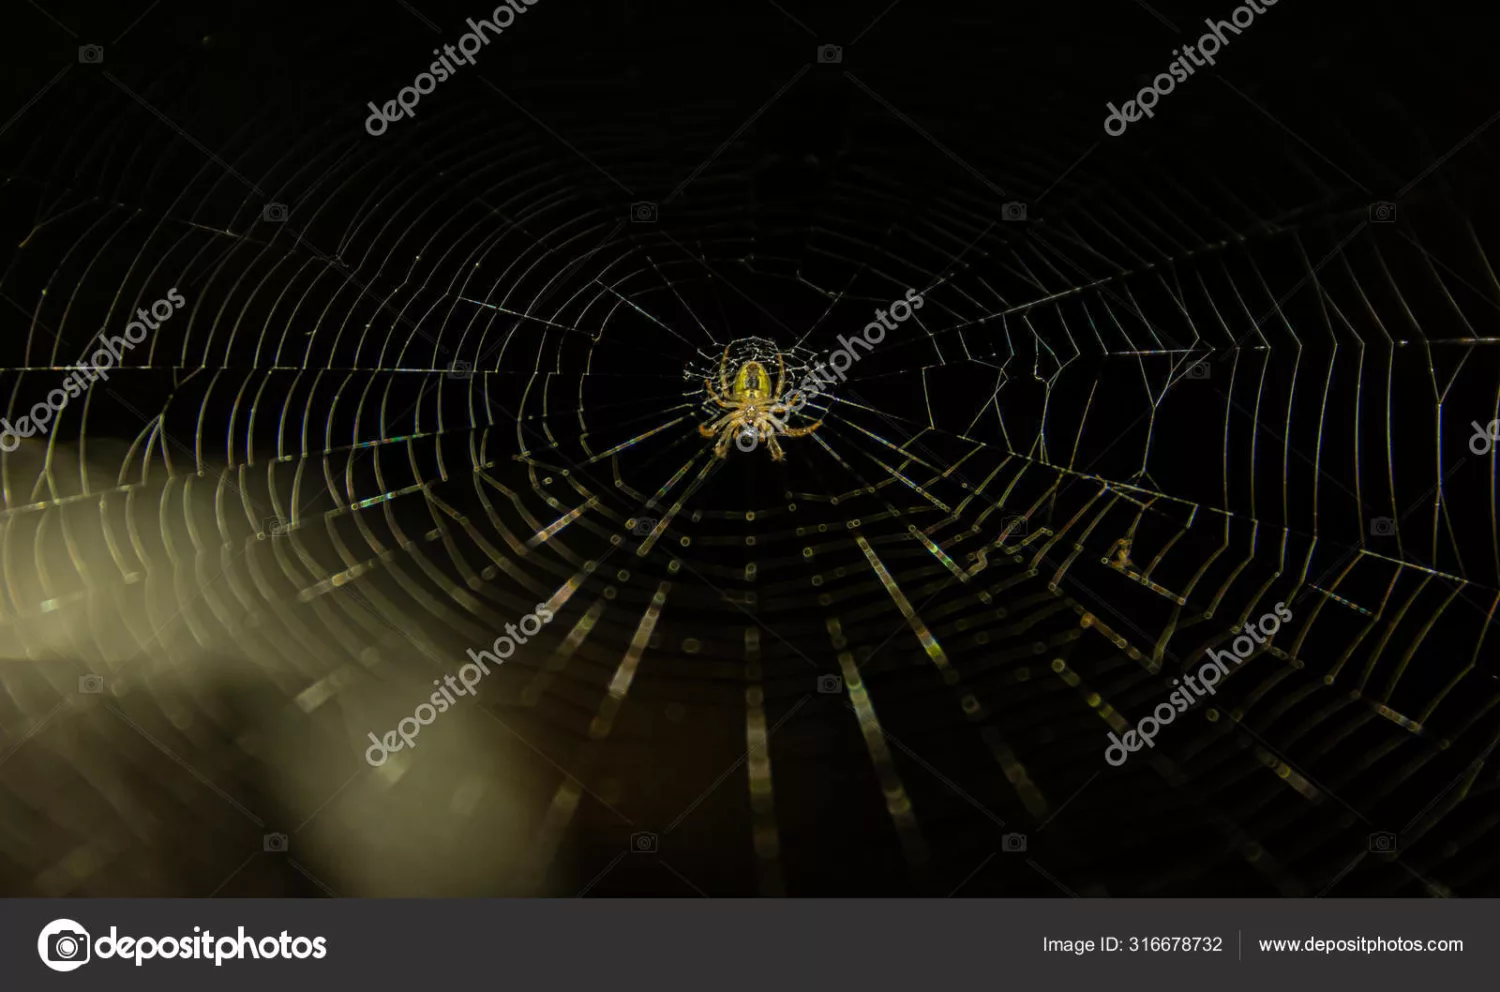 depositphotos 316678732 stock photo spider web dark background